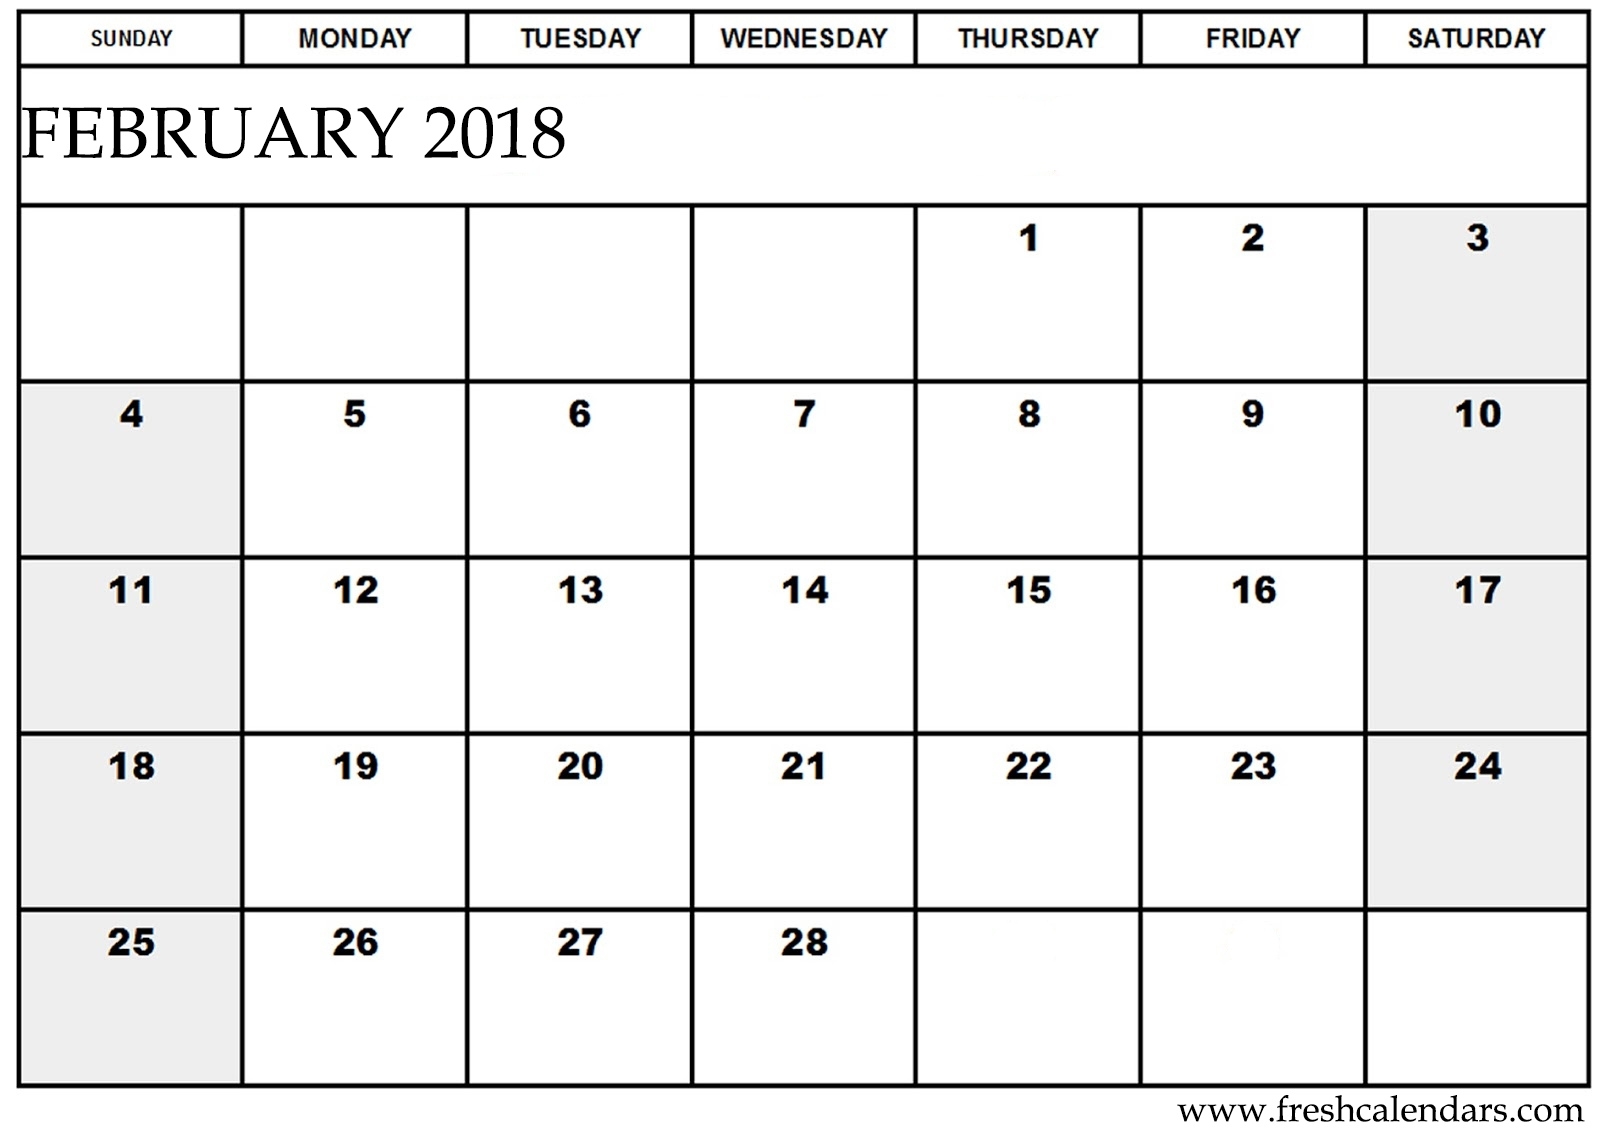 February 2018 Calendar Printable - Fresh Calendars Month Calendar Highlight Dates